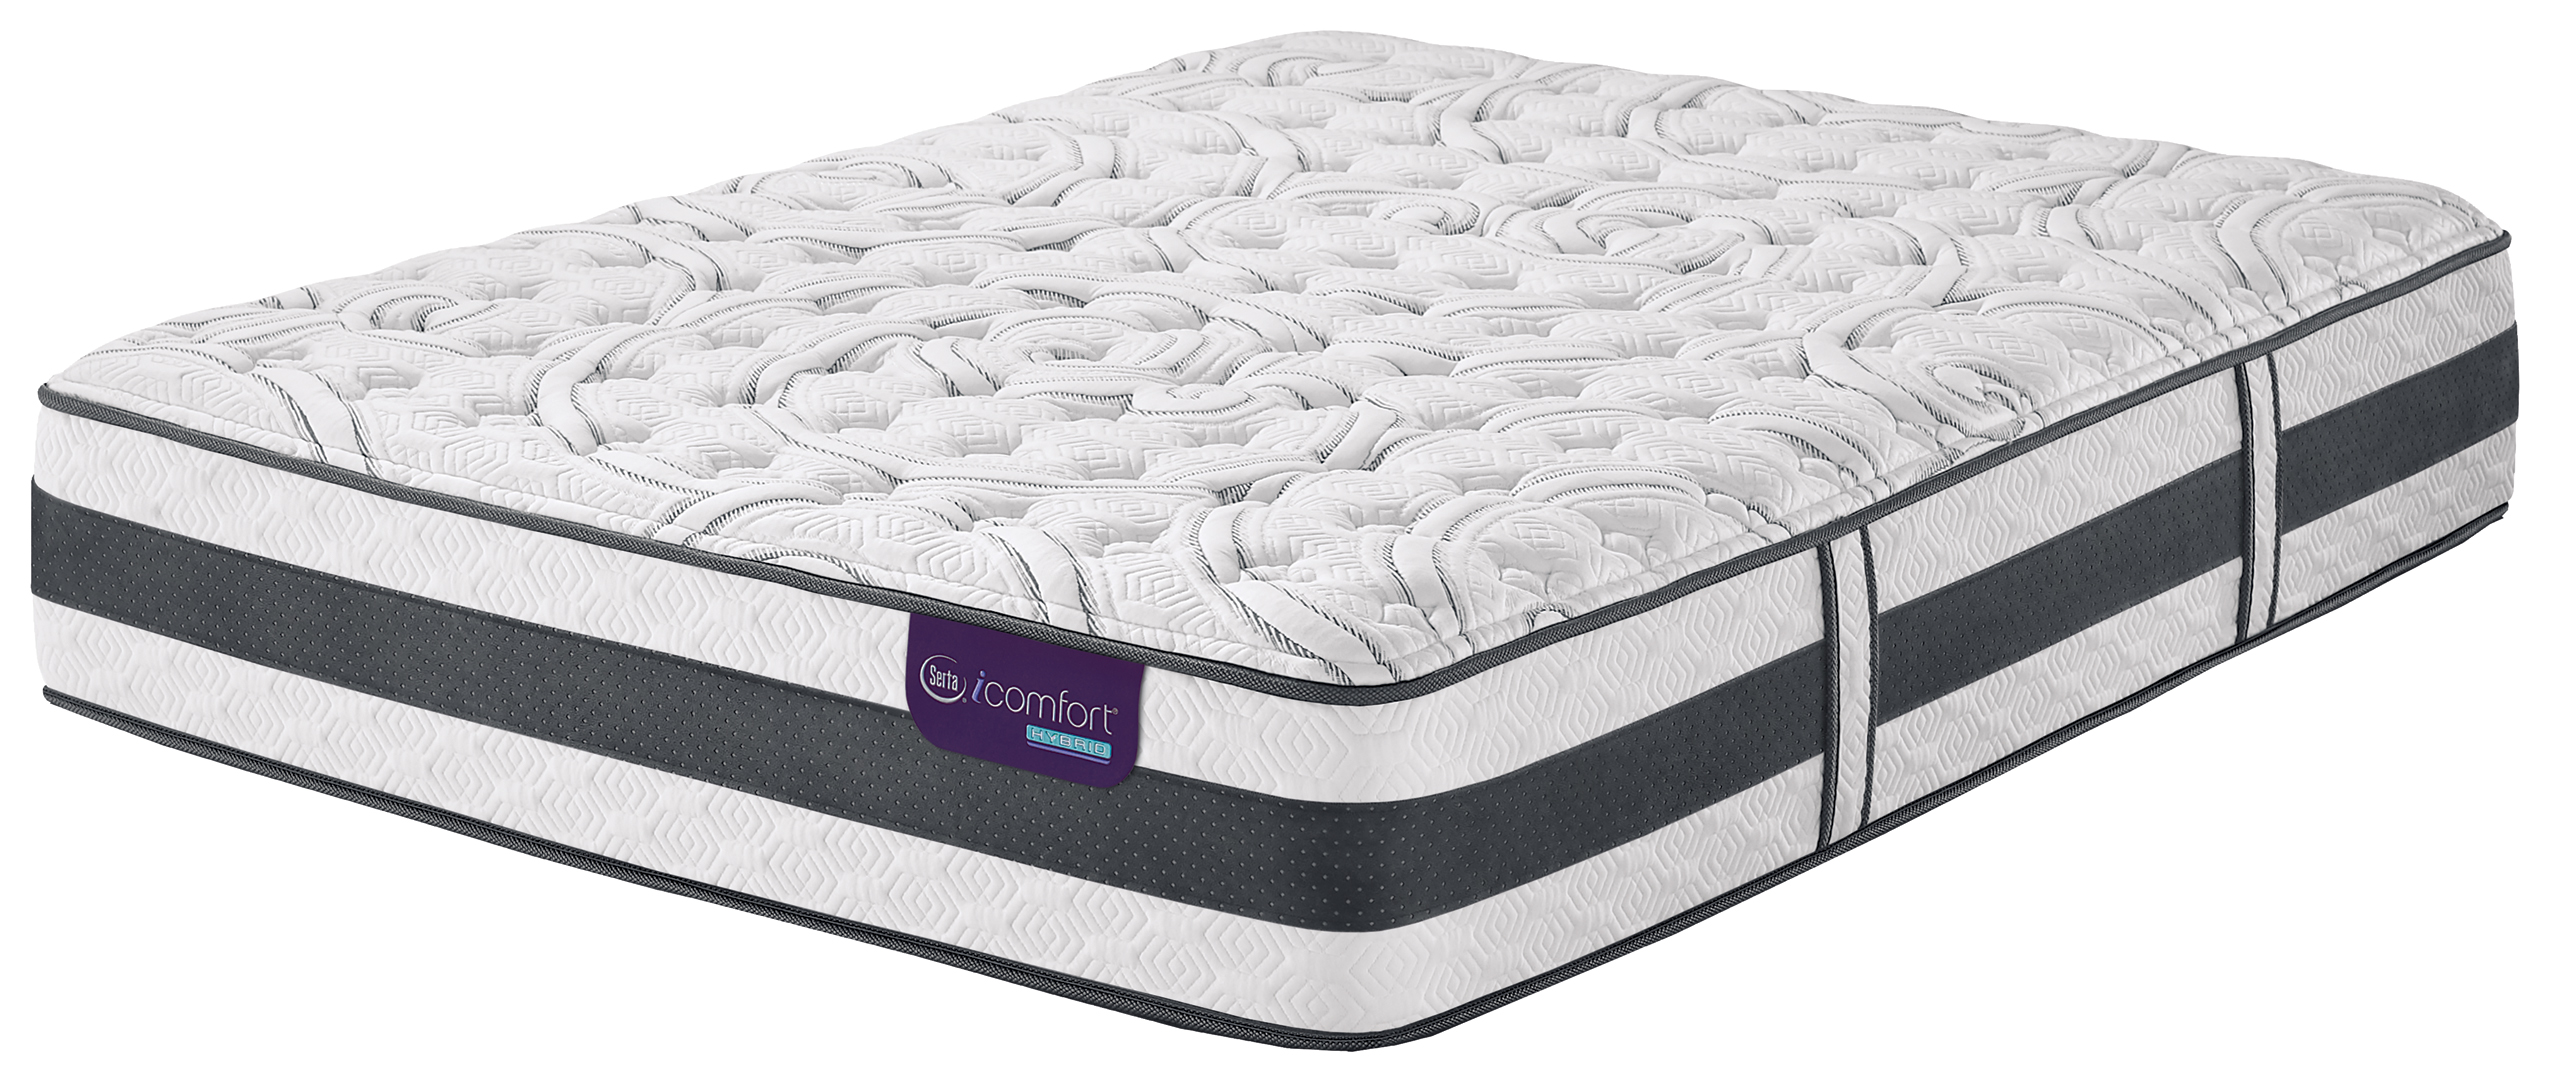 serta i-comfort hybrid applause firm king mattress